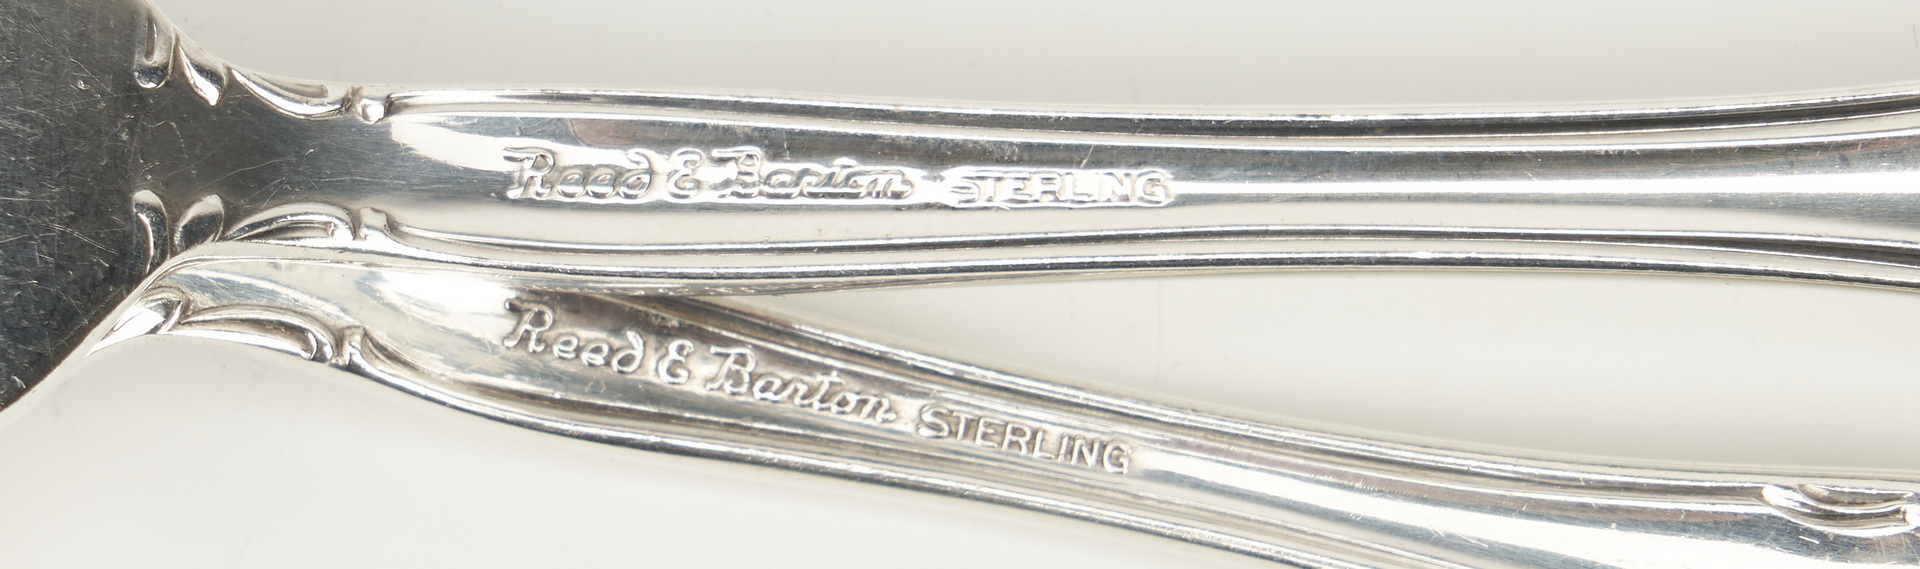 Lot 454: 45 Pcs. Reed & Barton Savannah Sterling Silver Flatware